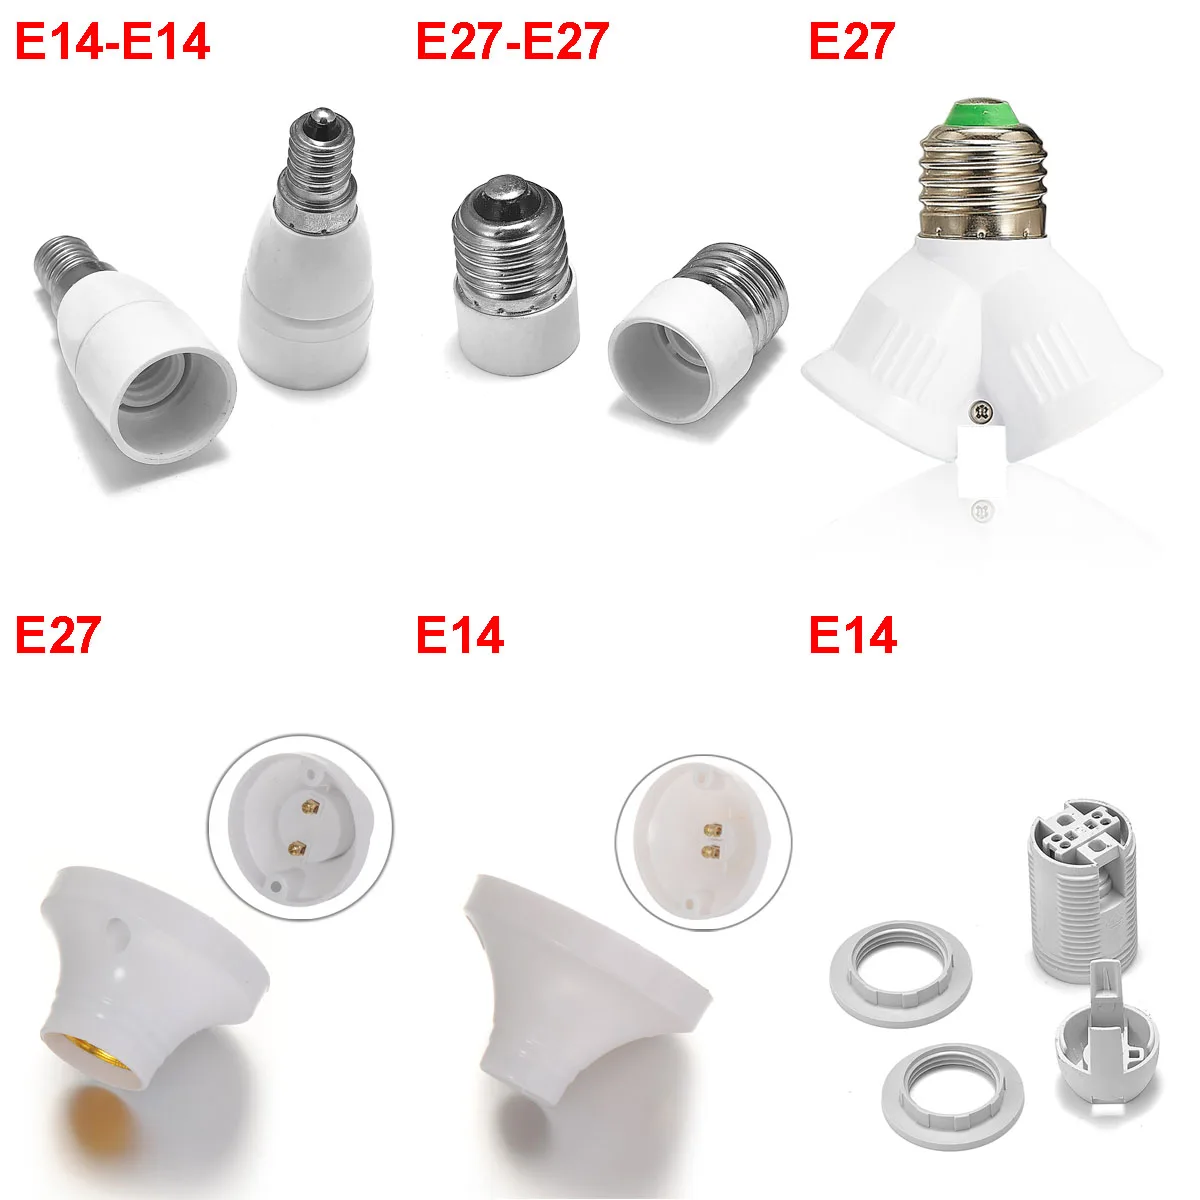 E14 to E14 Extension Socket E27 E27 Adapter Lamp Holder E27 E14 Bulb Socket Lamp Base Plug Socket LED Light|Lamp Bases| - AliExpress